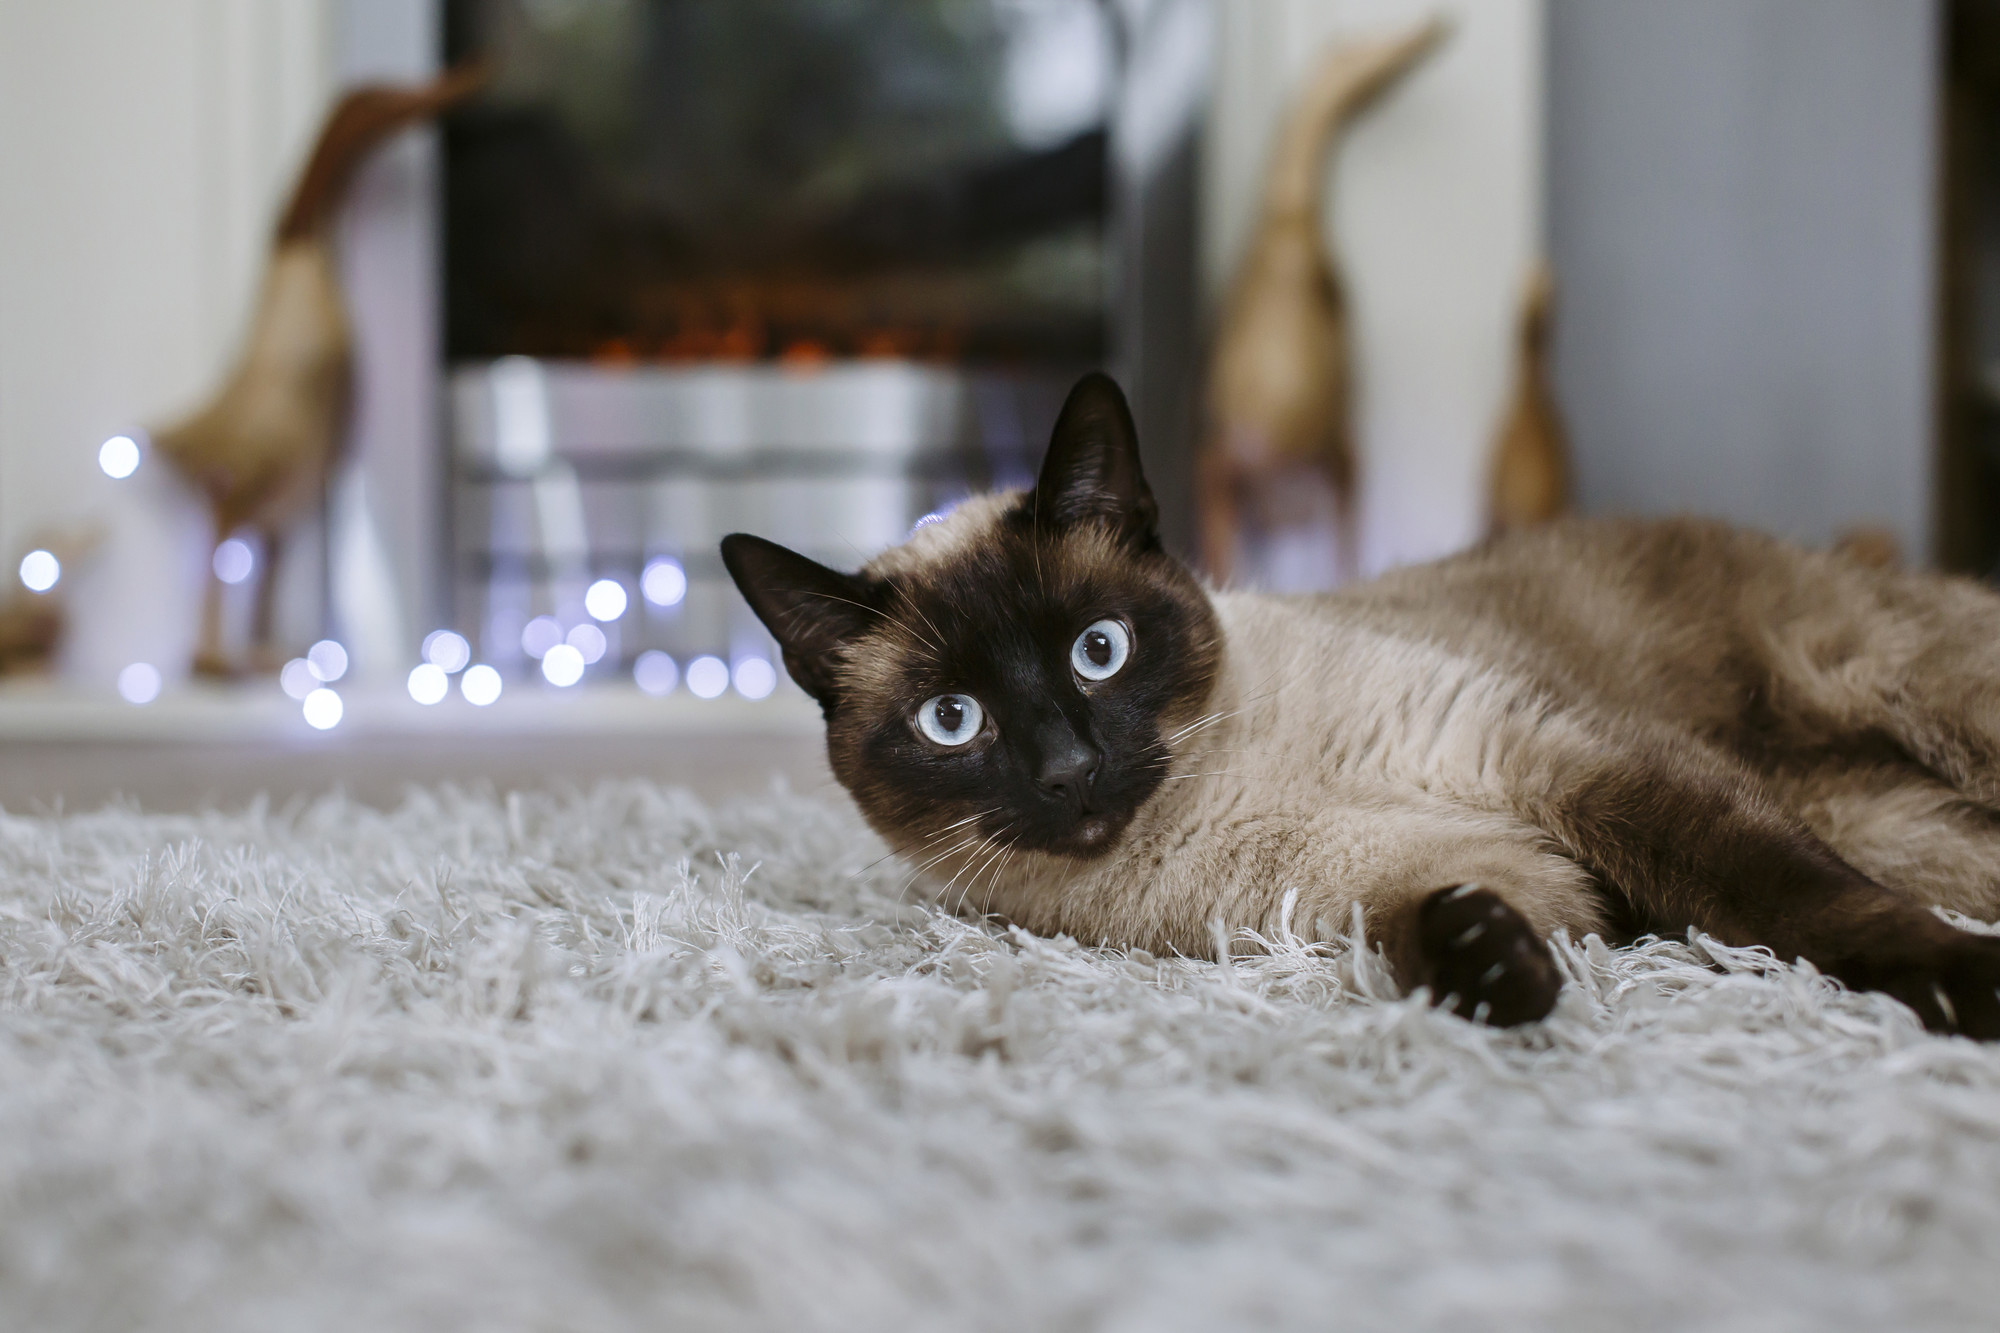 Burmese-cross cat lying on fluffy rug, looking into camera